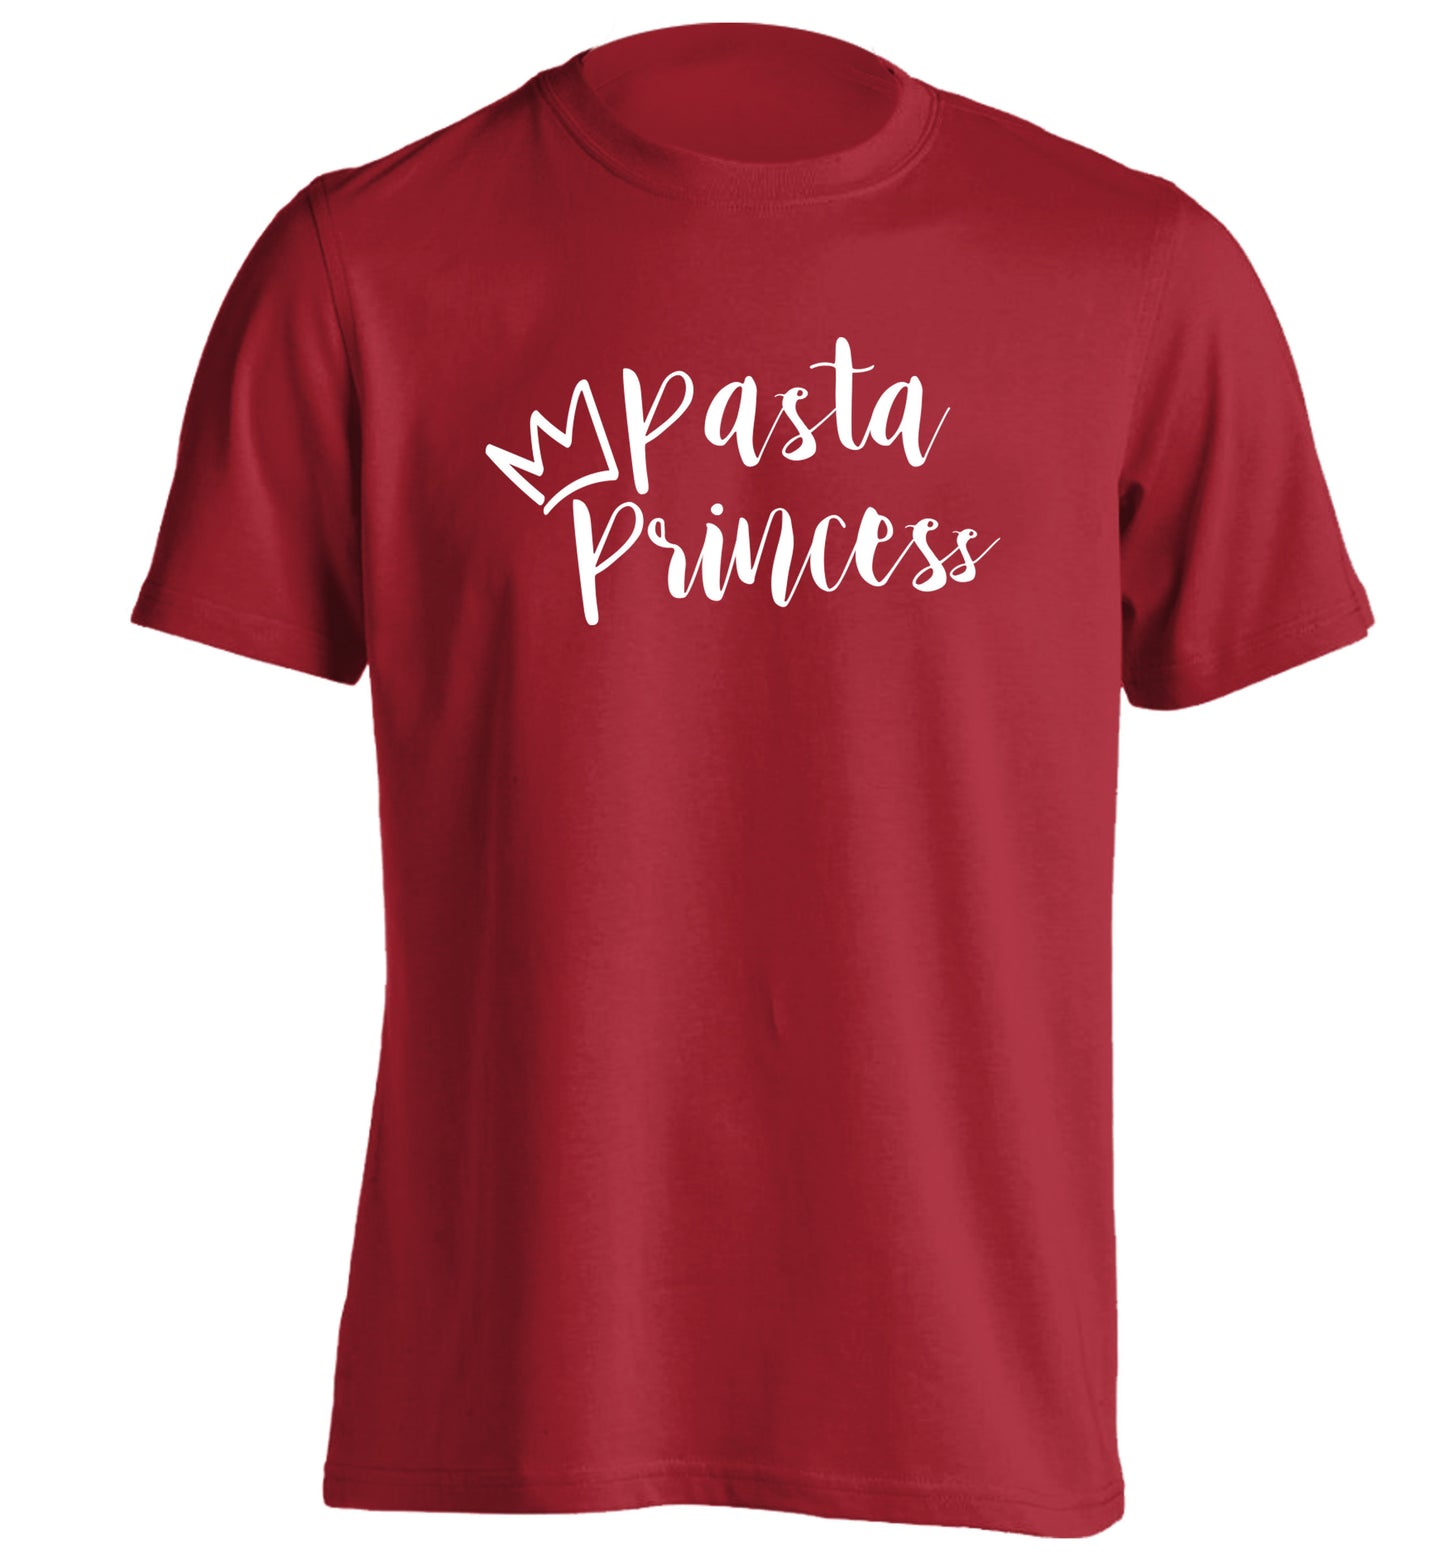 Pasta Princess adults unisex red Tshirt 2XL